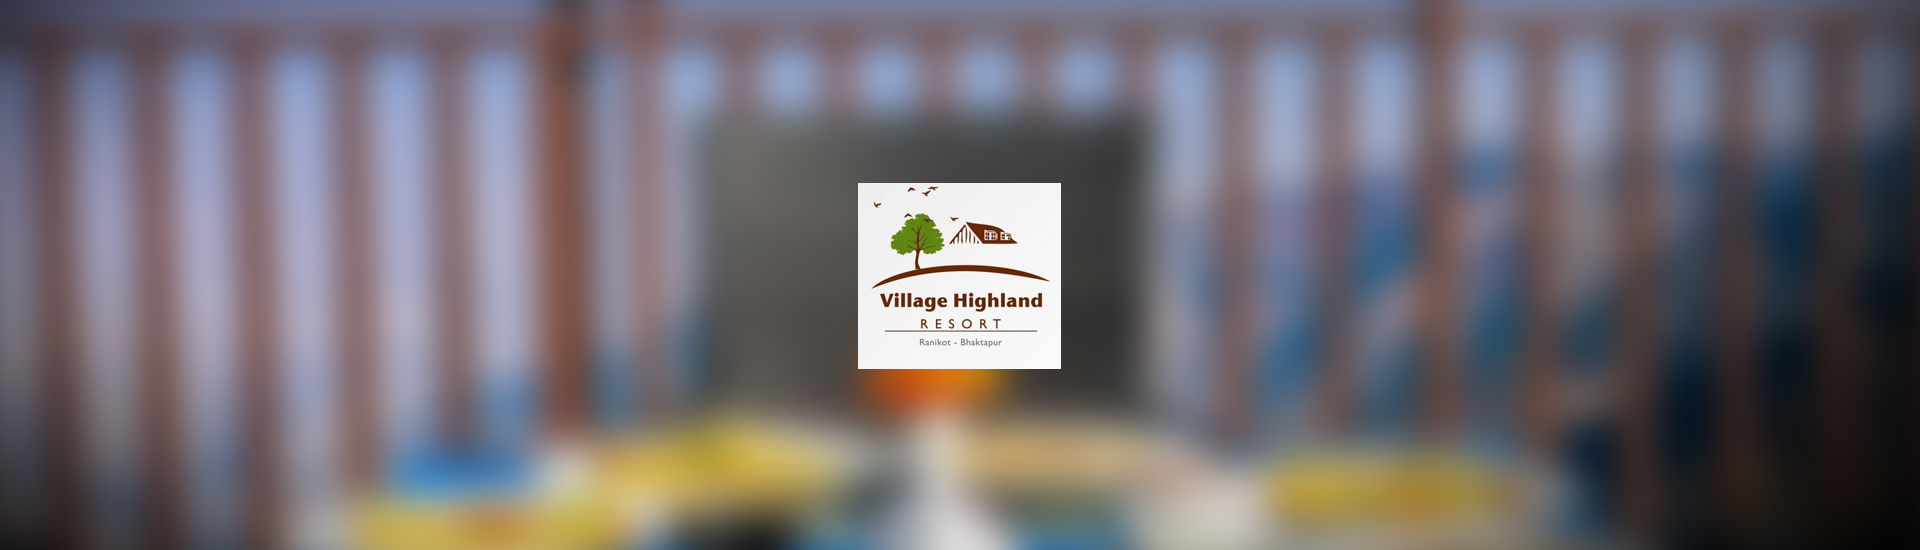 Village Highland Resort